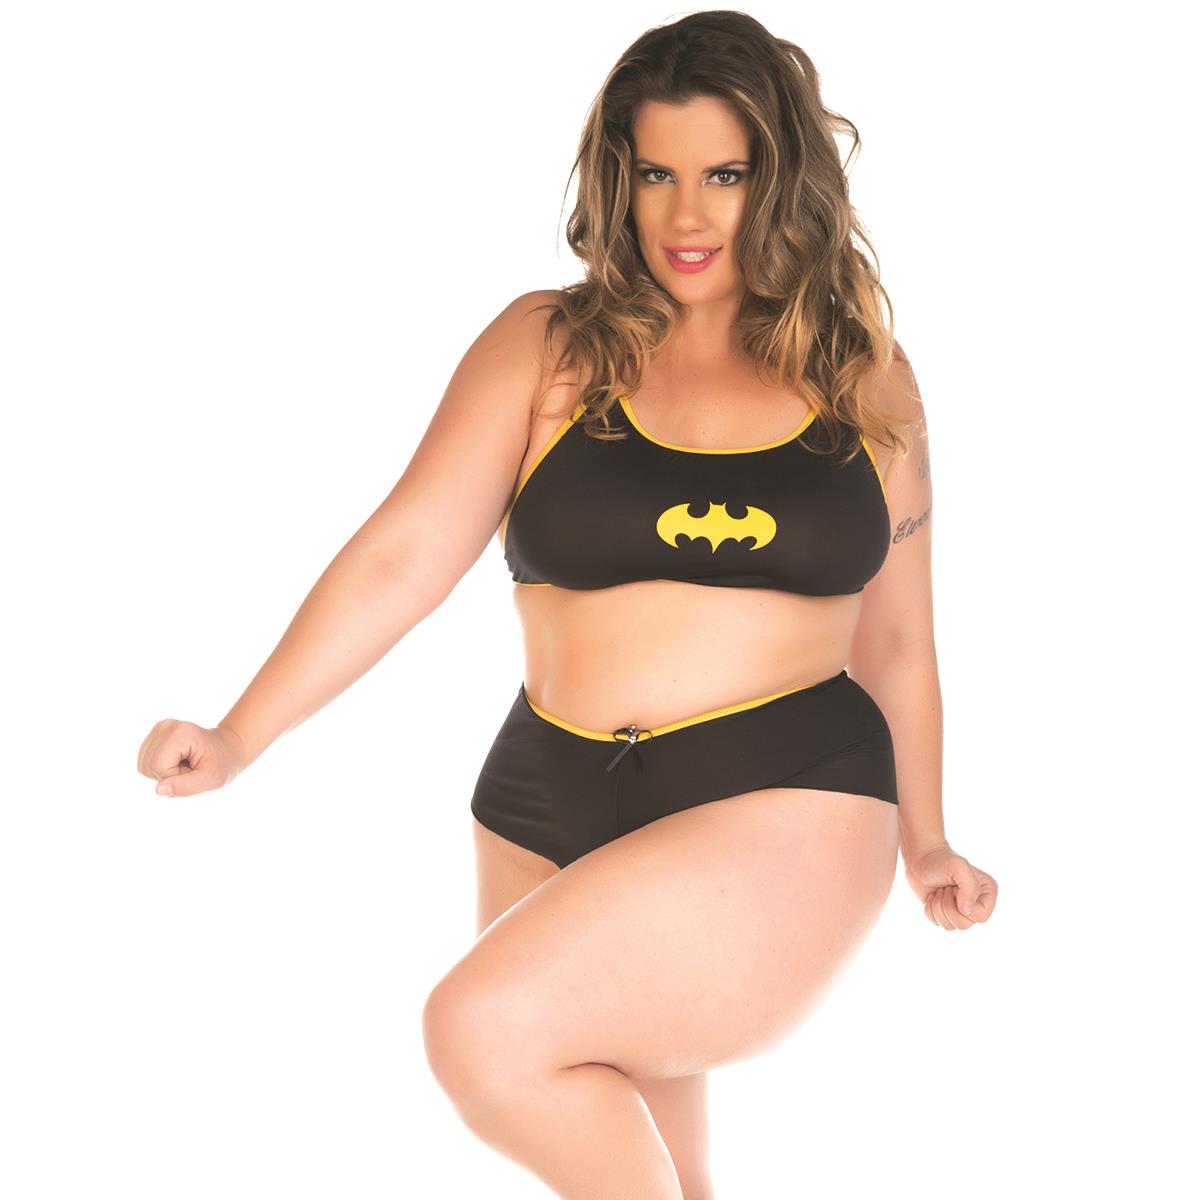 Fantasia Conjunto Bat Girl Plus Size Pimenta Sexy